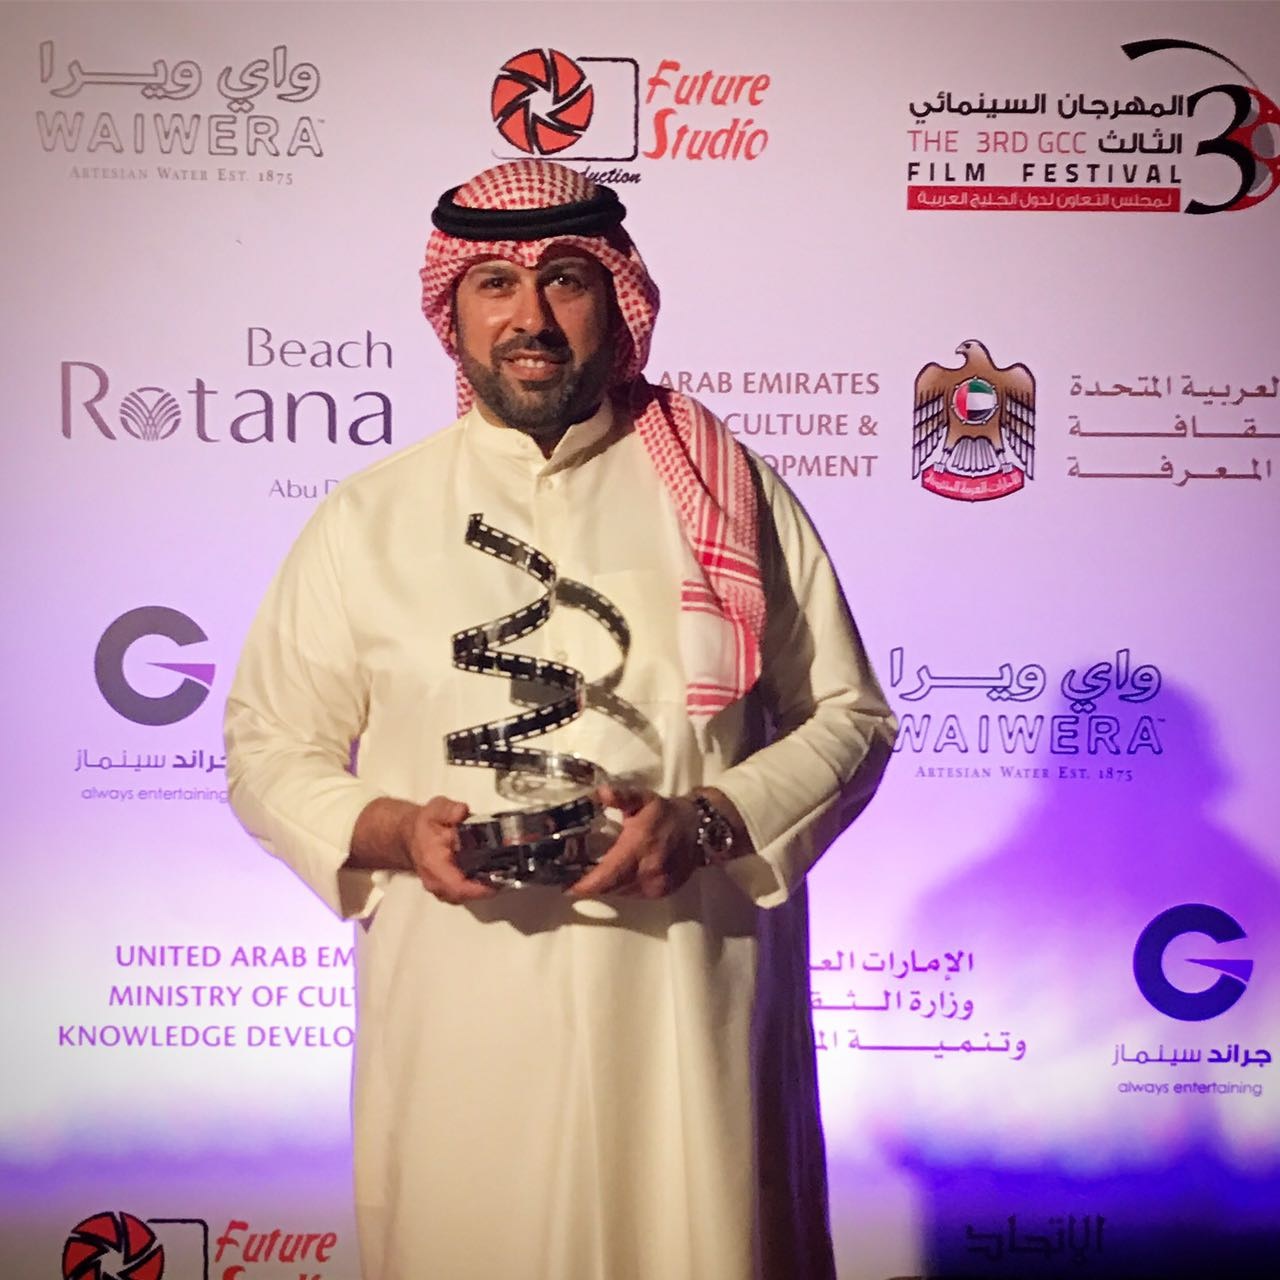 Kuwaiti Director Ali Hassan